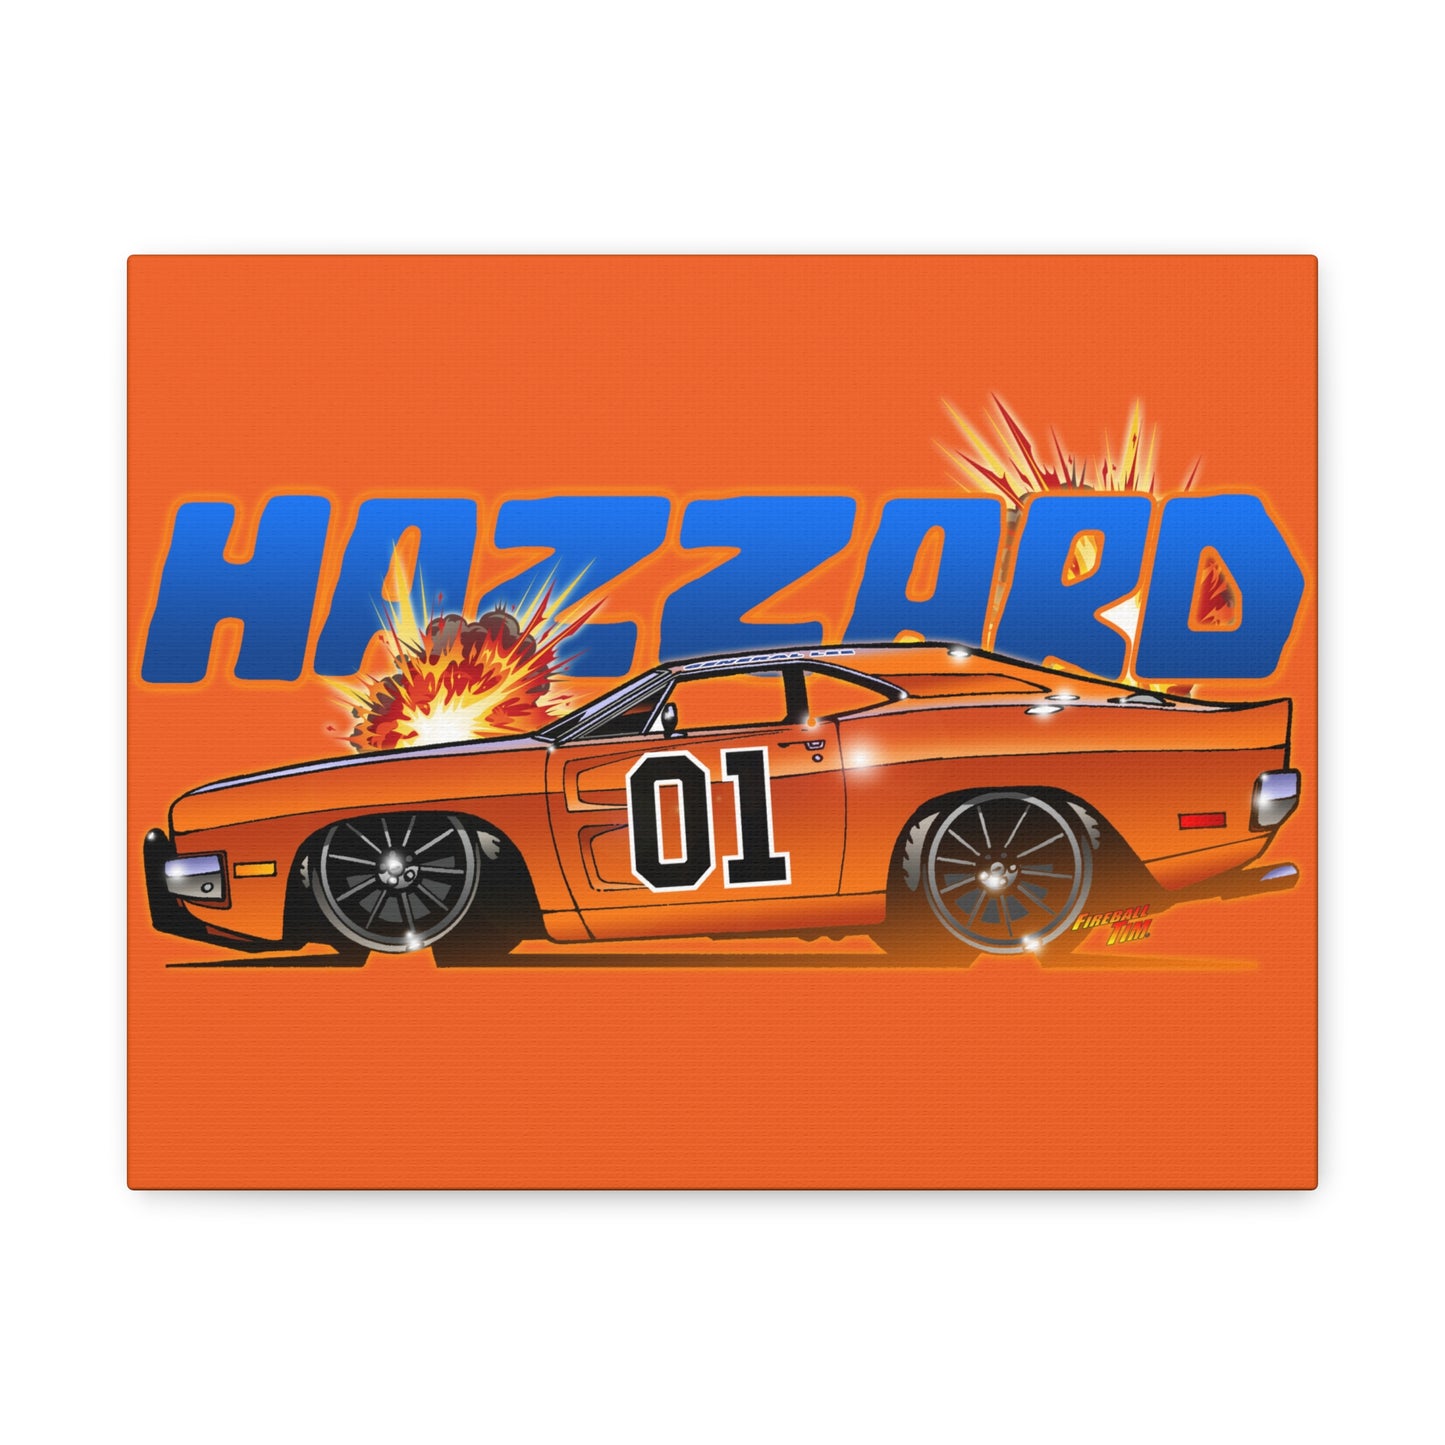 GENERAL LEE Dukes of Hazzard Movie Car Canvas Gallery Art Print 11x14